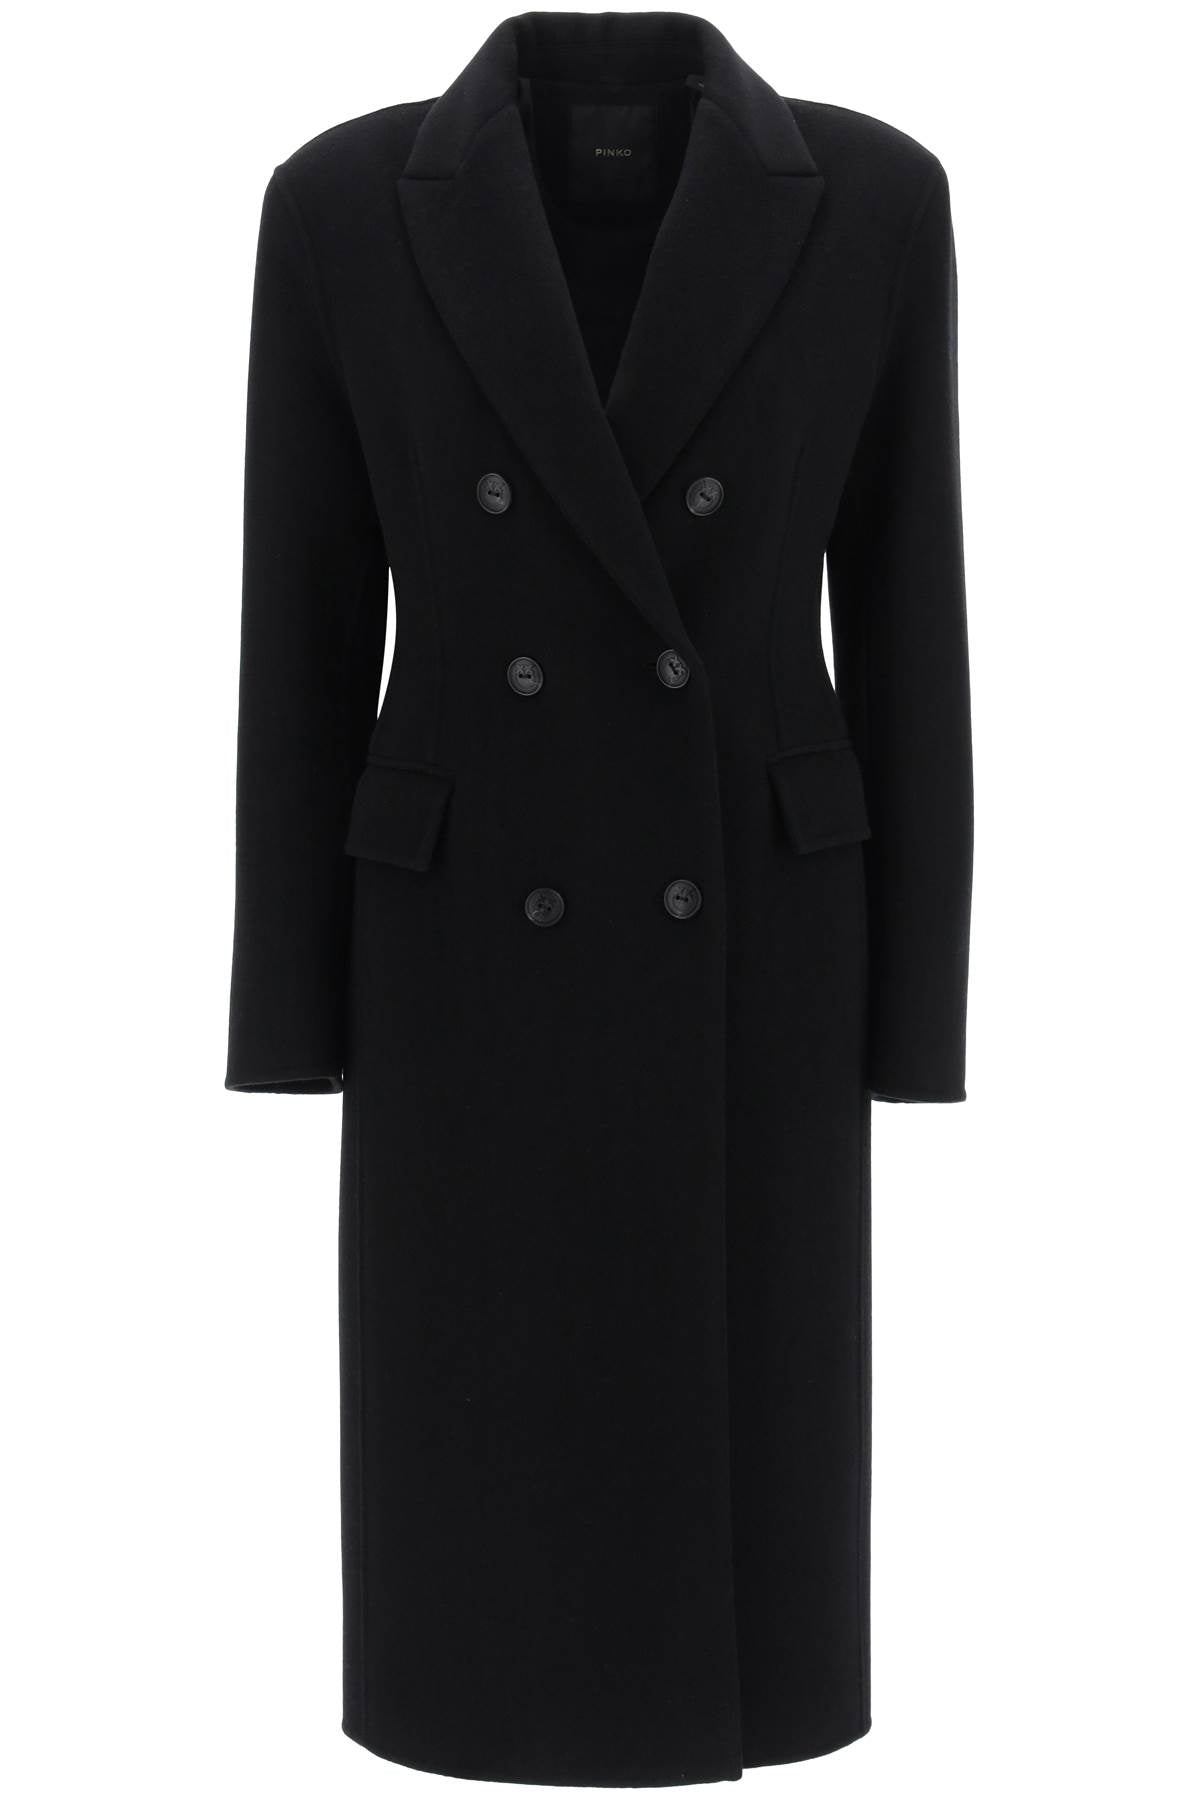 PINKO Classic Black Wool Coat for Women